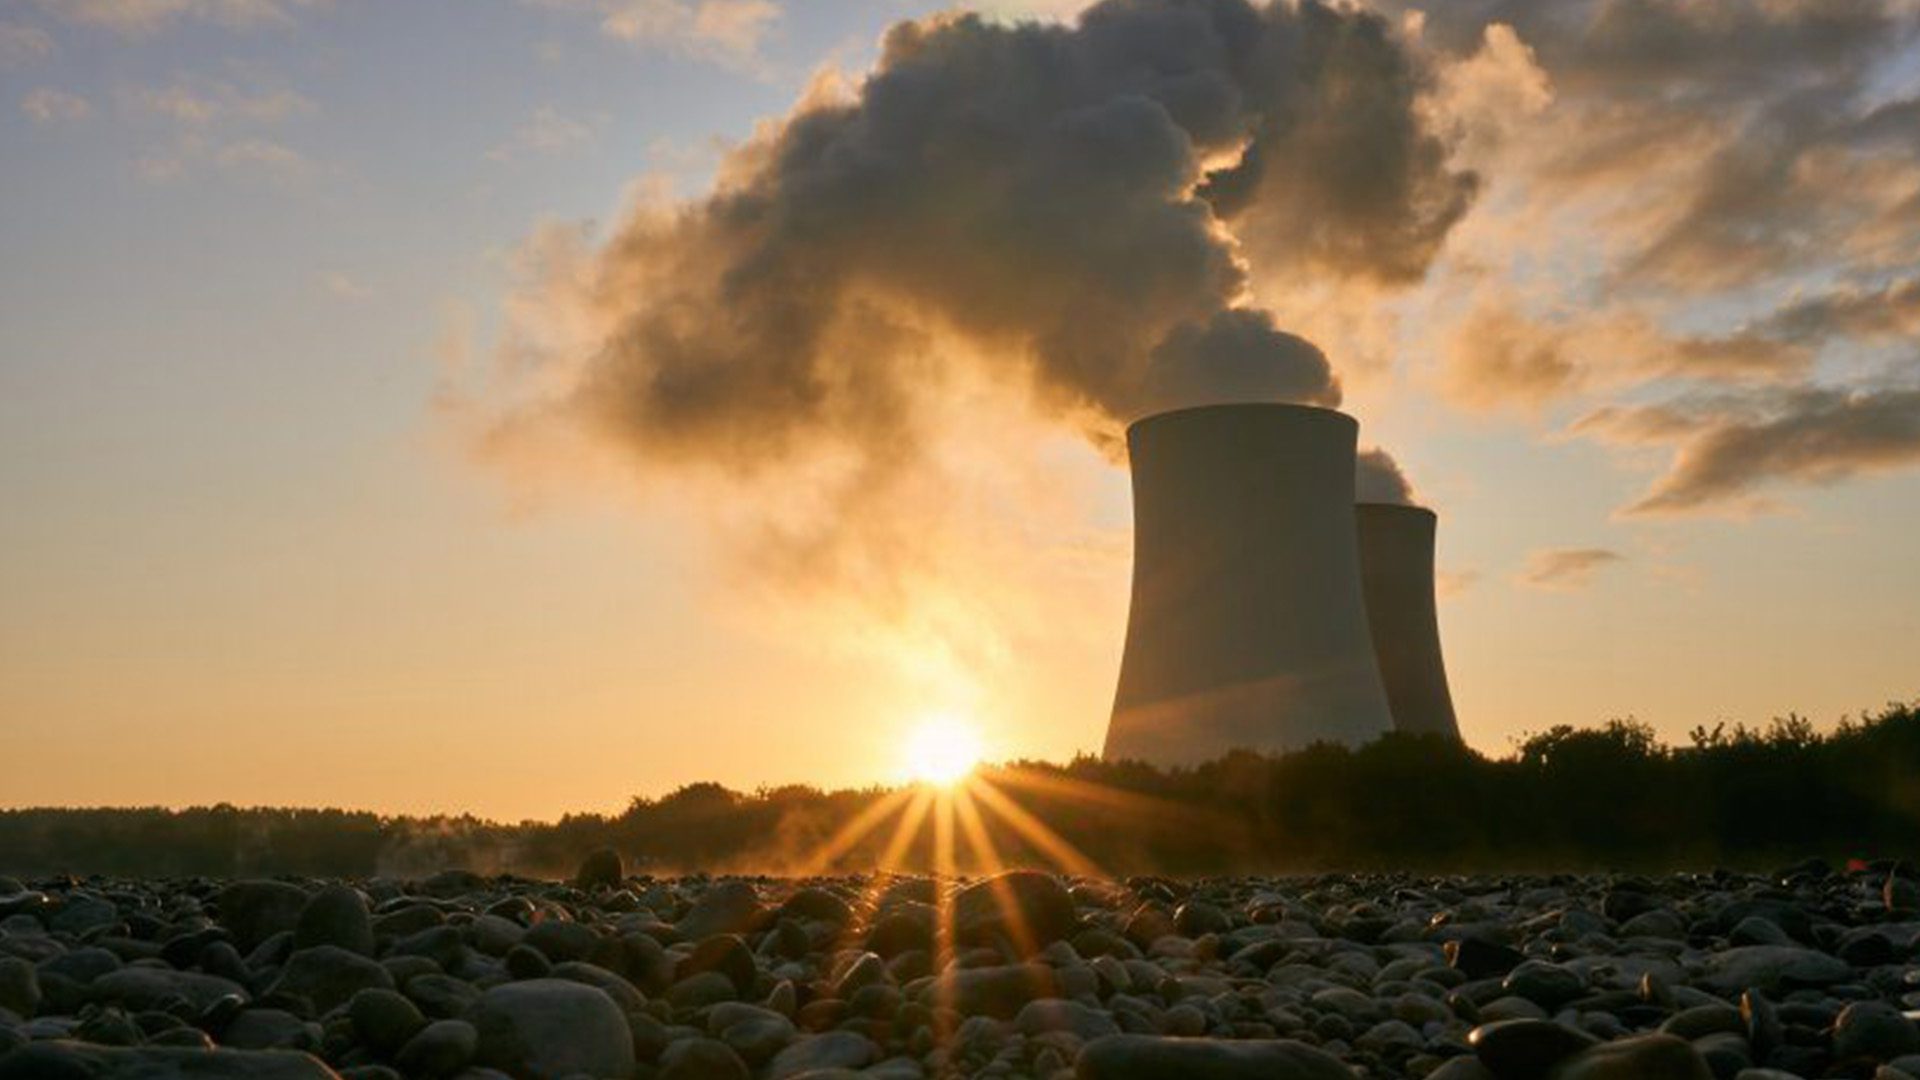 Nuclear power plant myths about nuclear energy; Photo Credit: Energy.gov